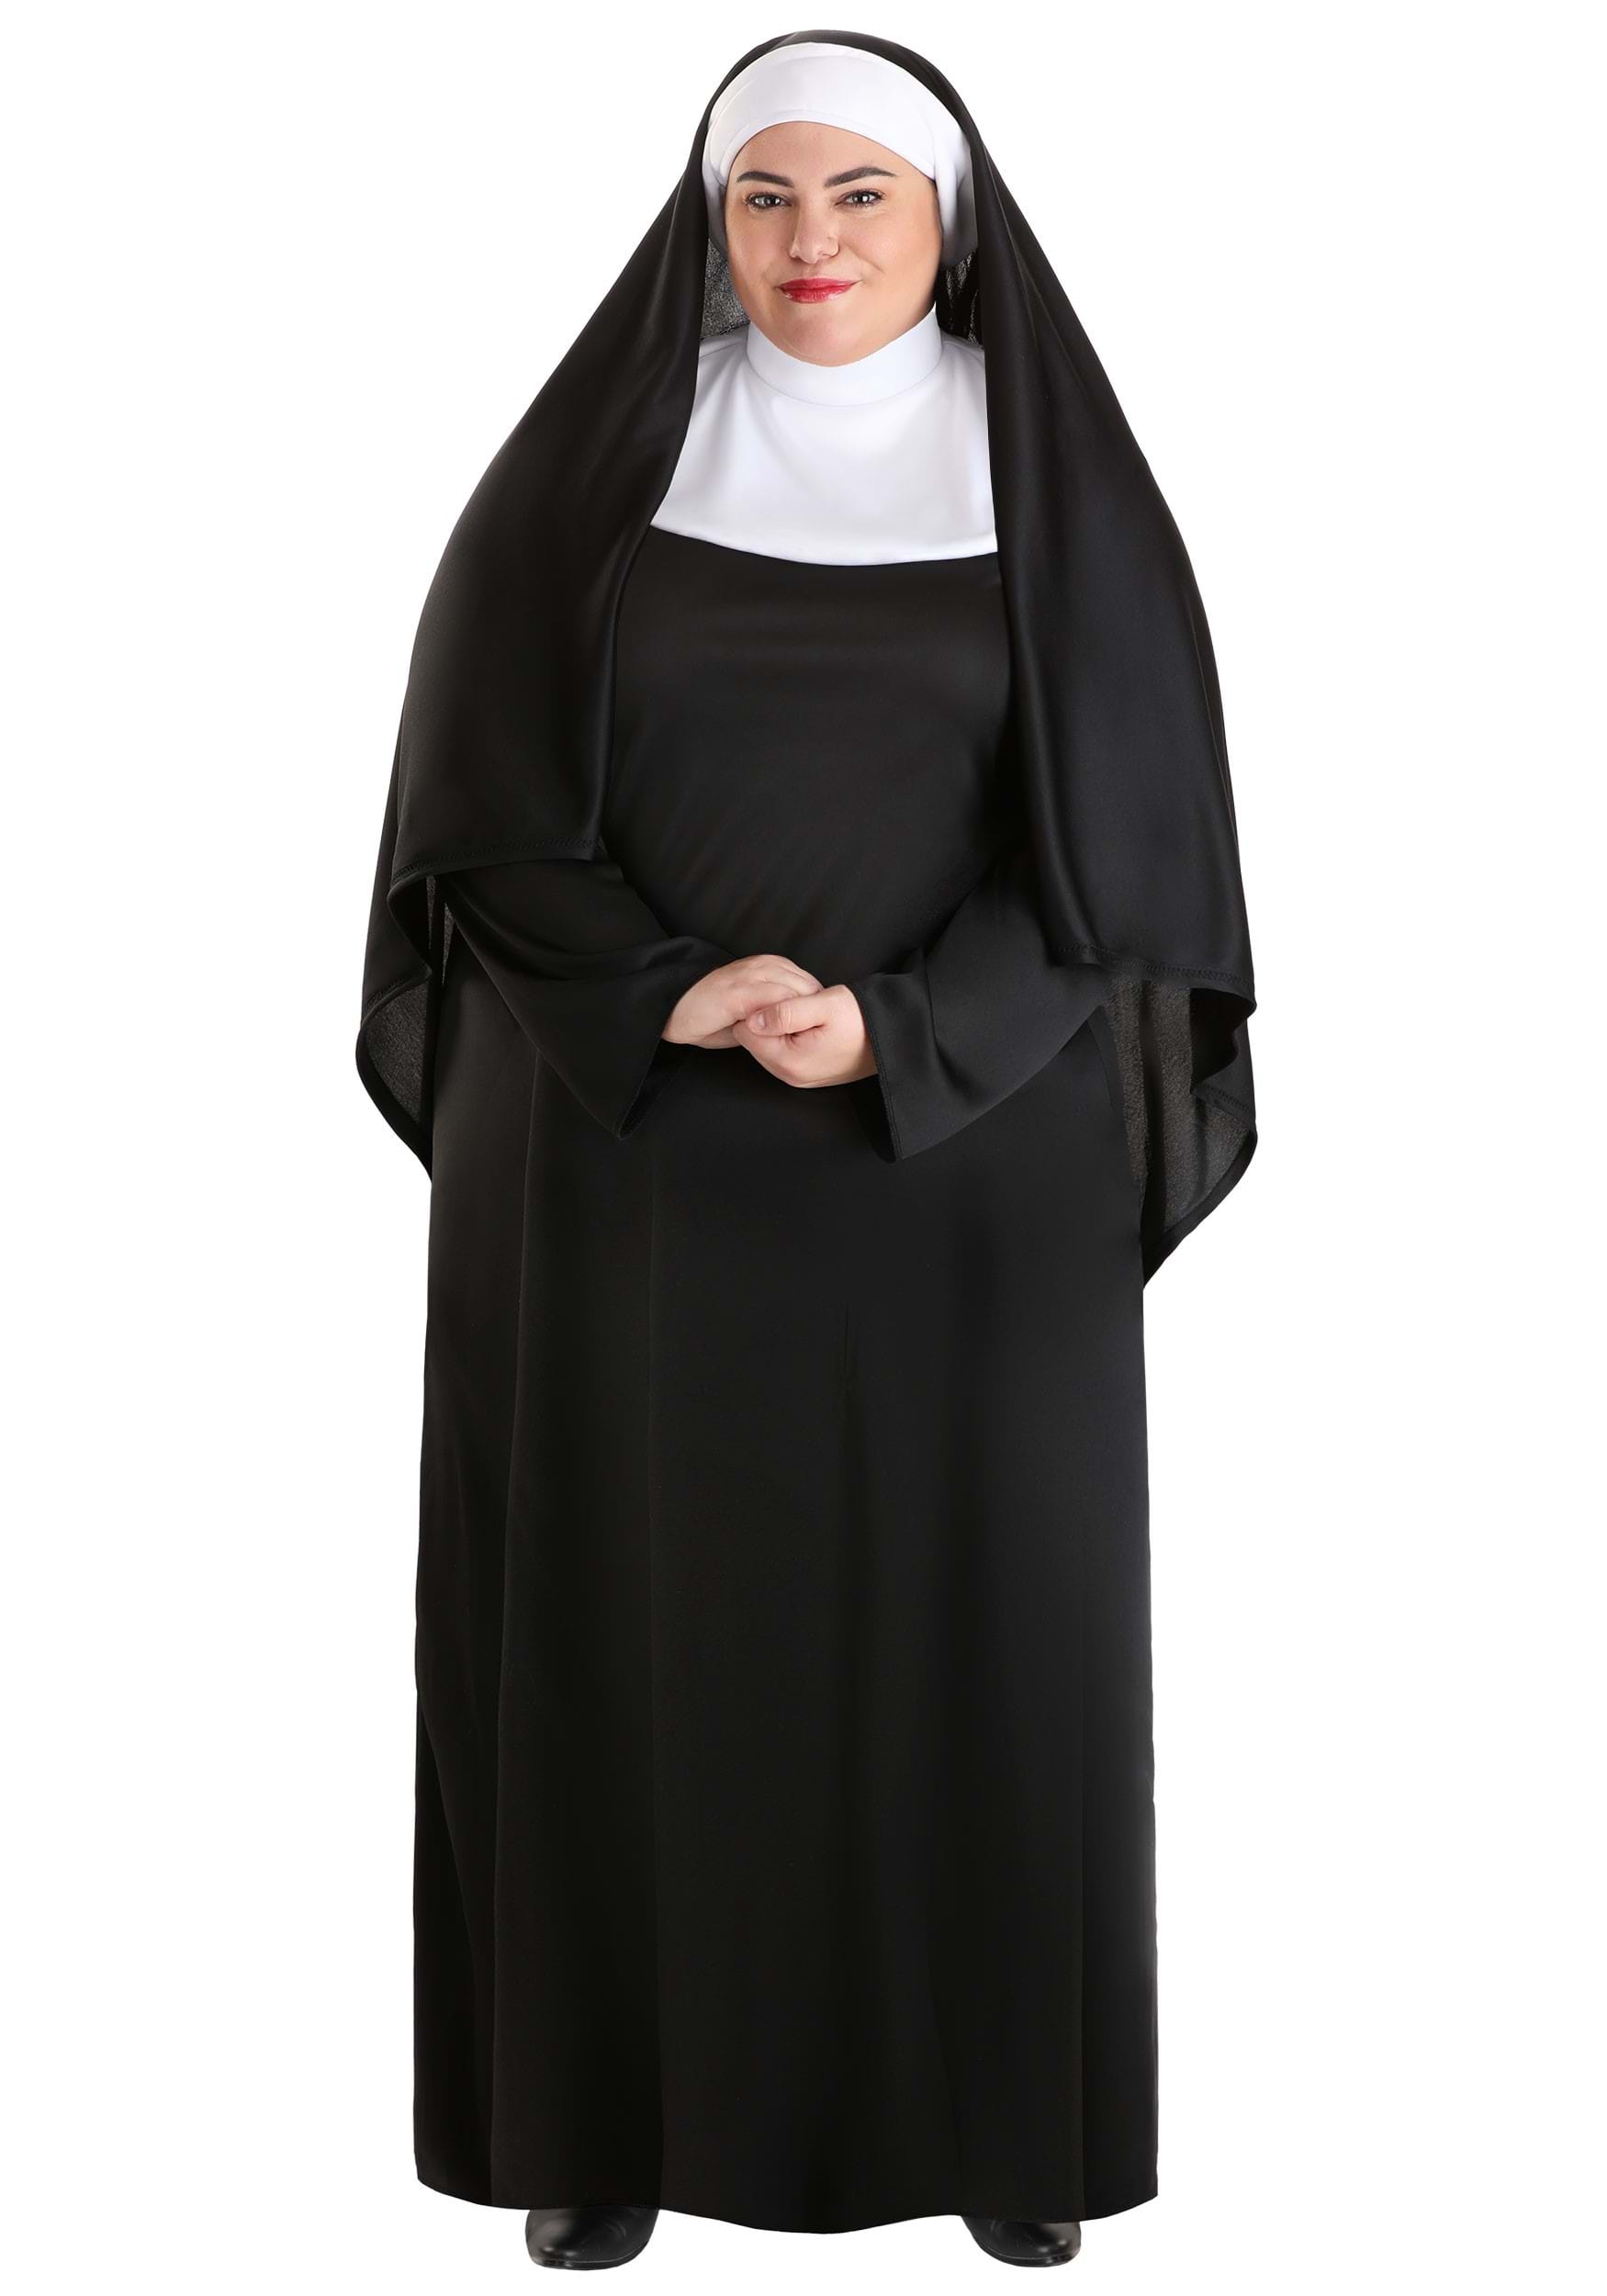 Photos - Fancy Dress FUN Costumes Traditional Nun Plus Size Costume for Women | Religious Costu